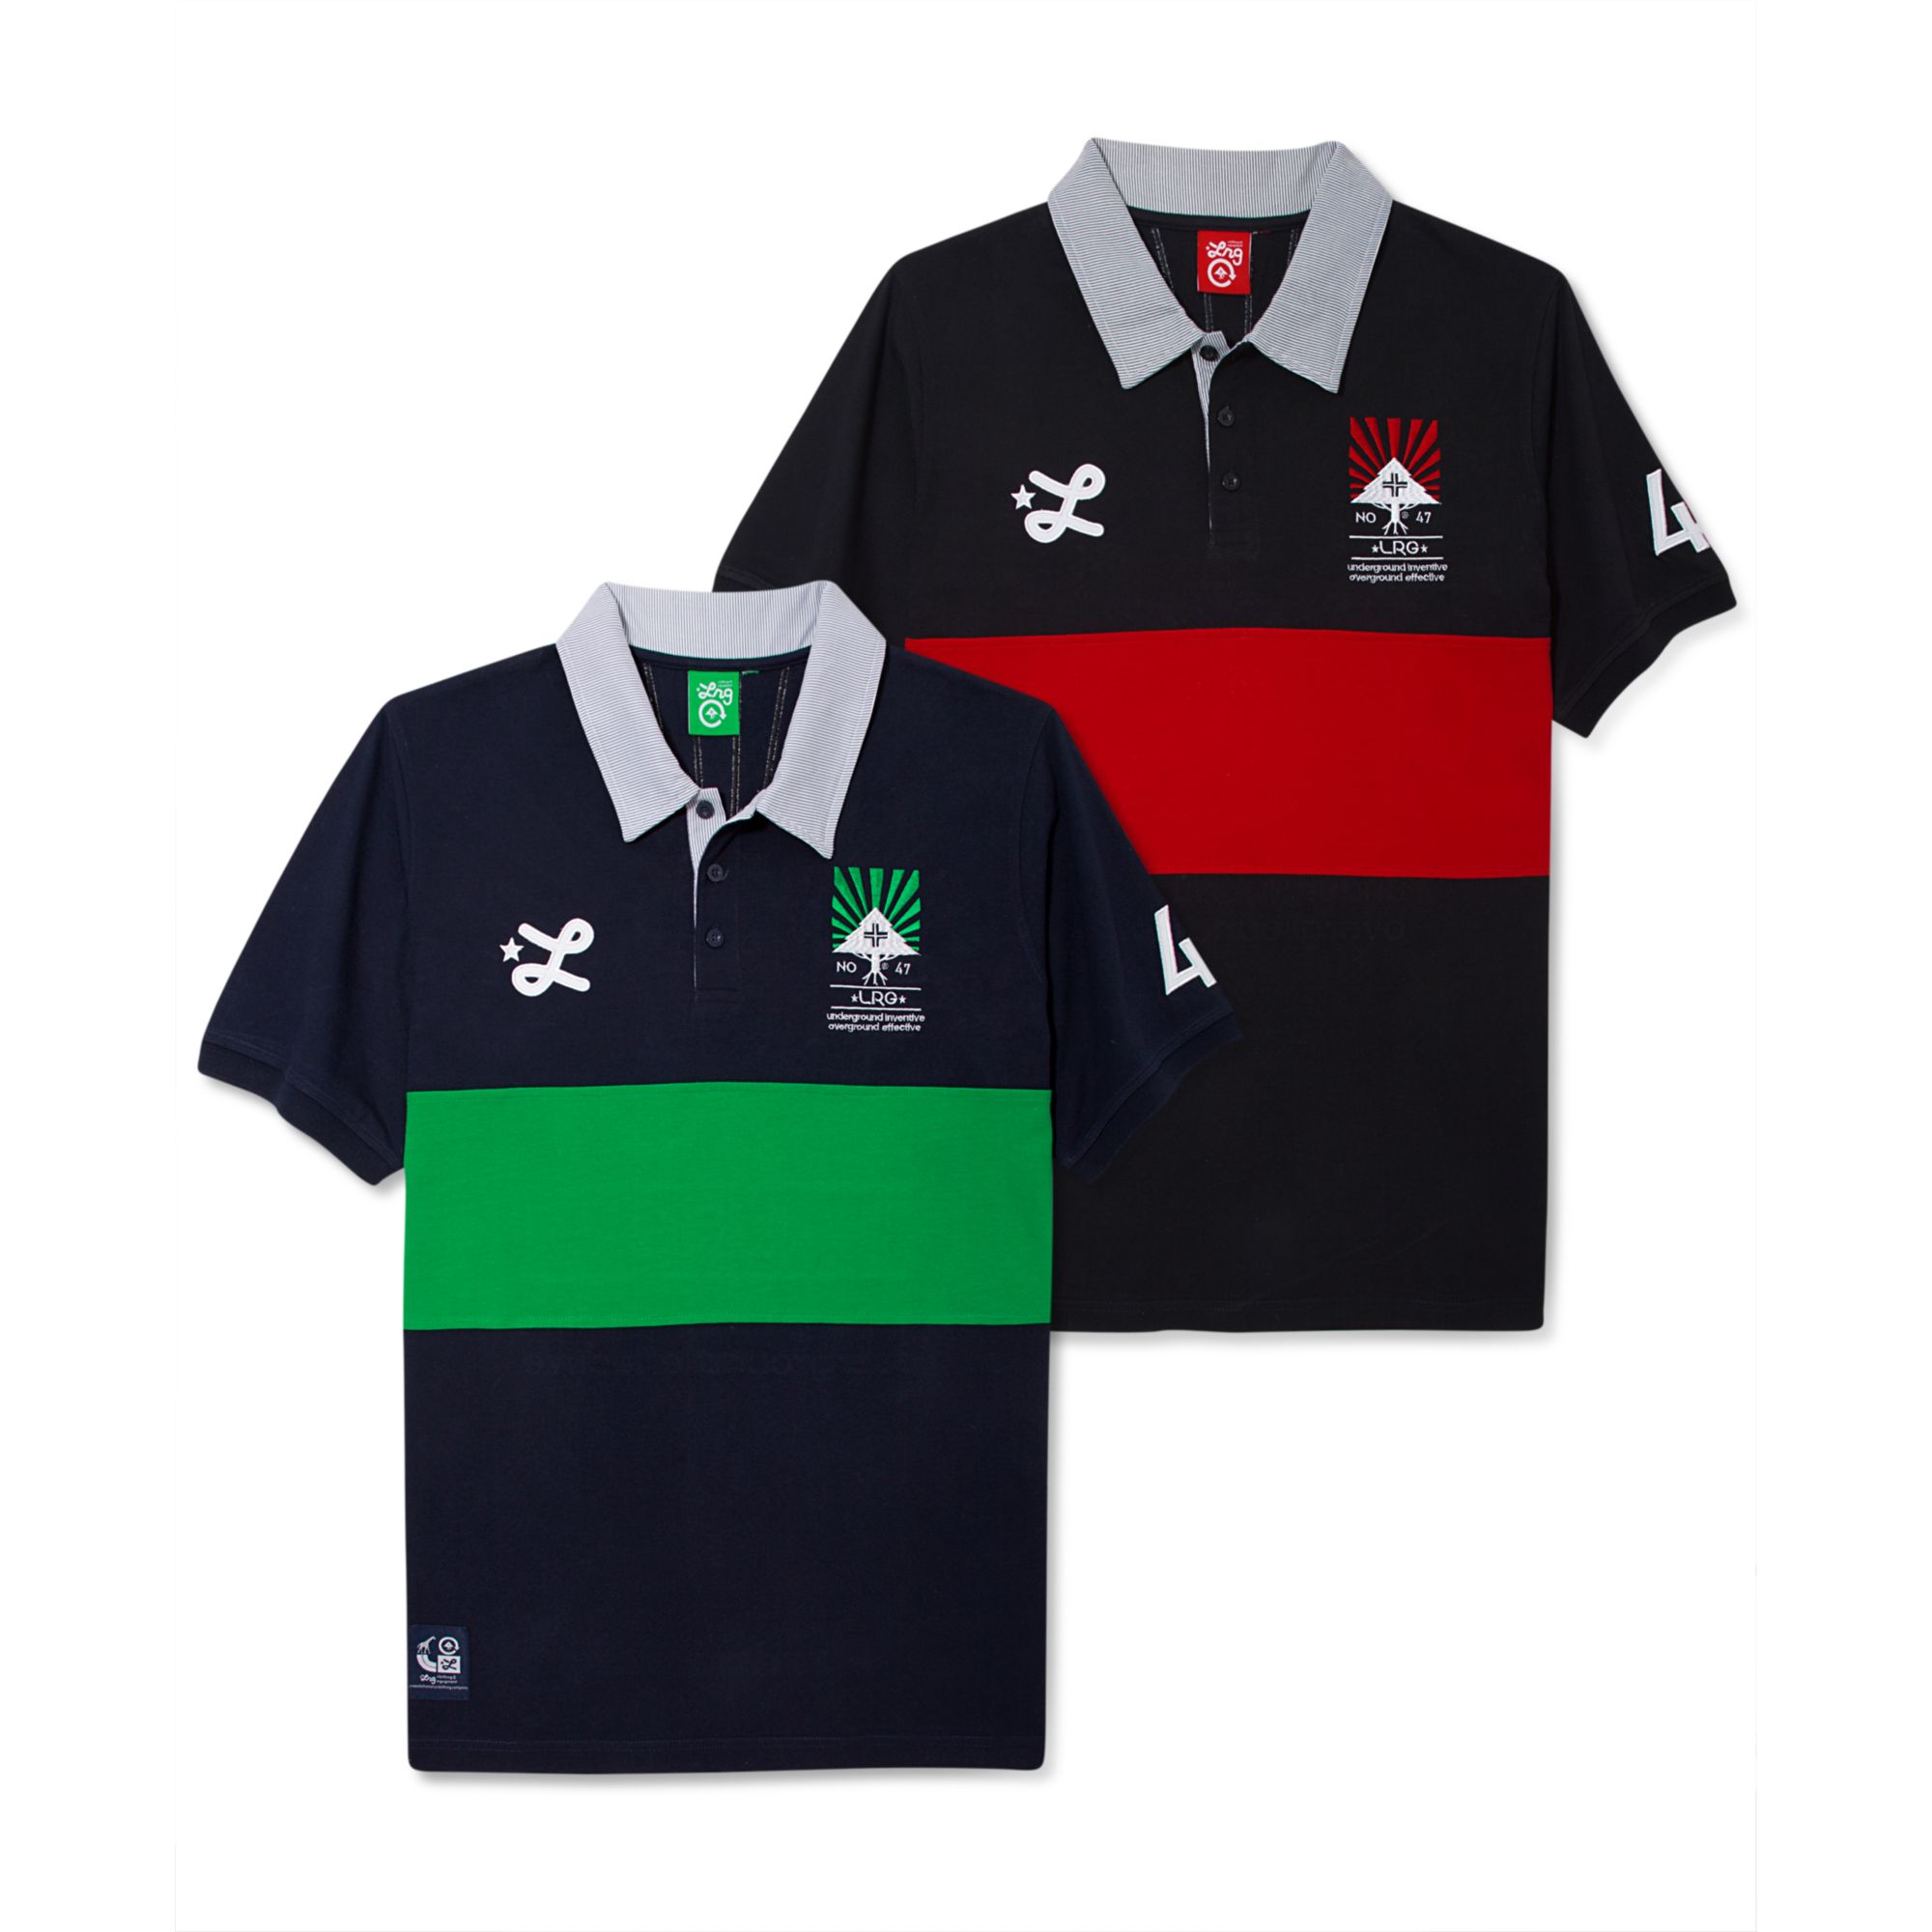 LRG Cotton Horizon Line Graphic Polo Shirt in Black for Men - Lyst